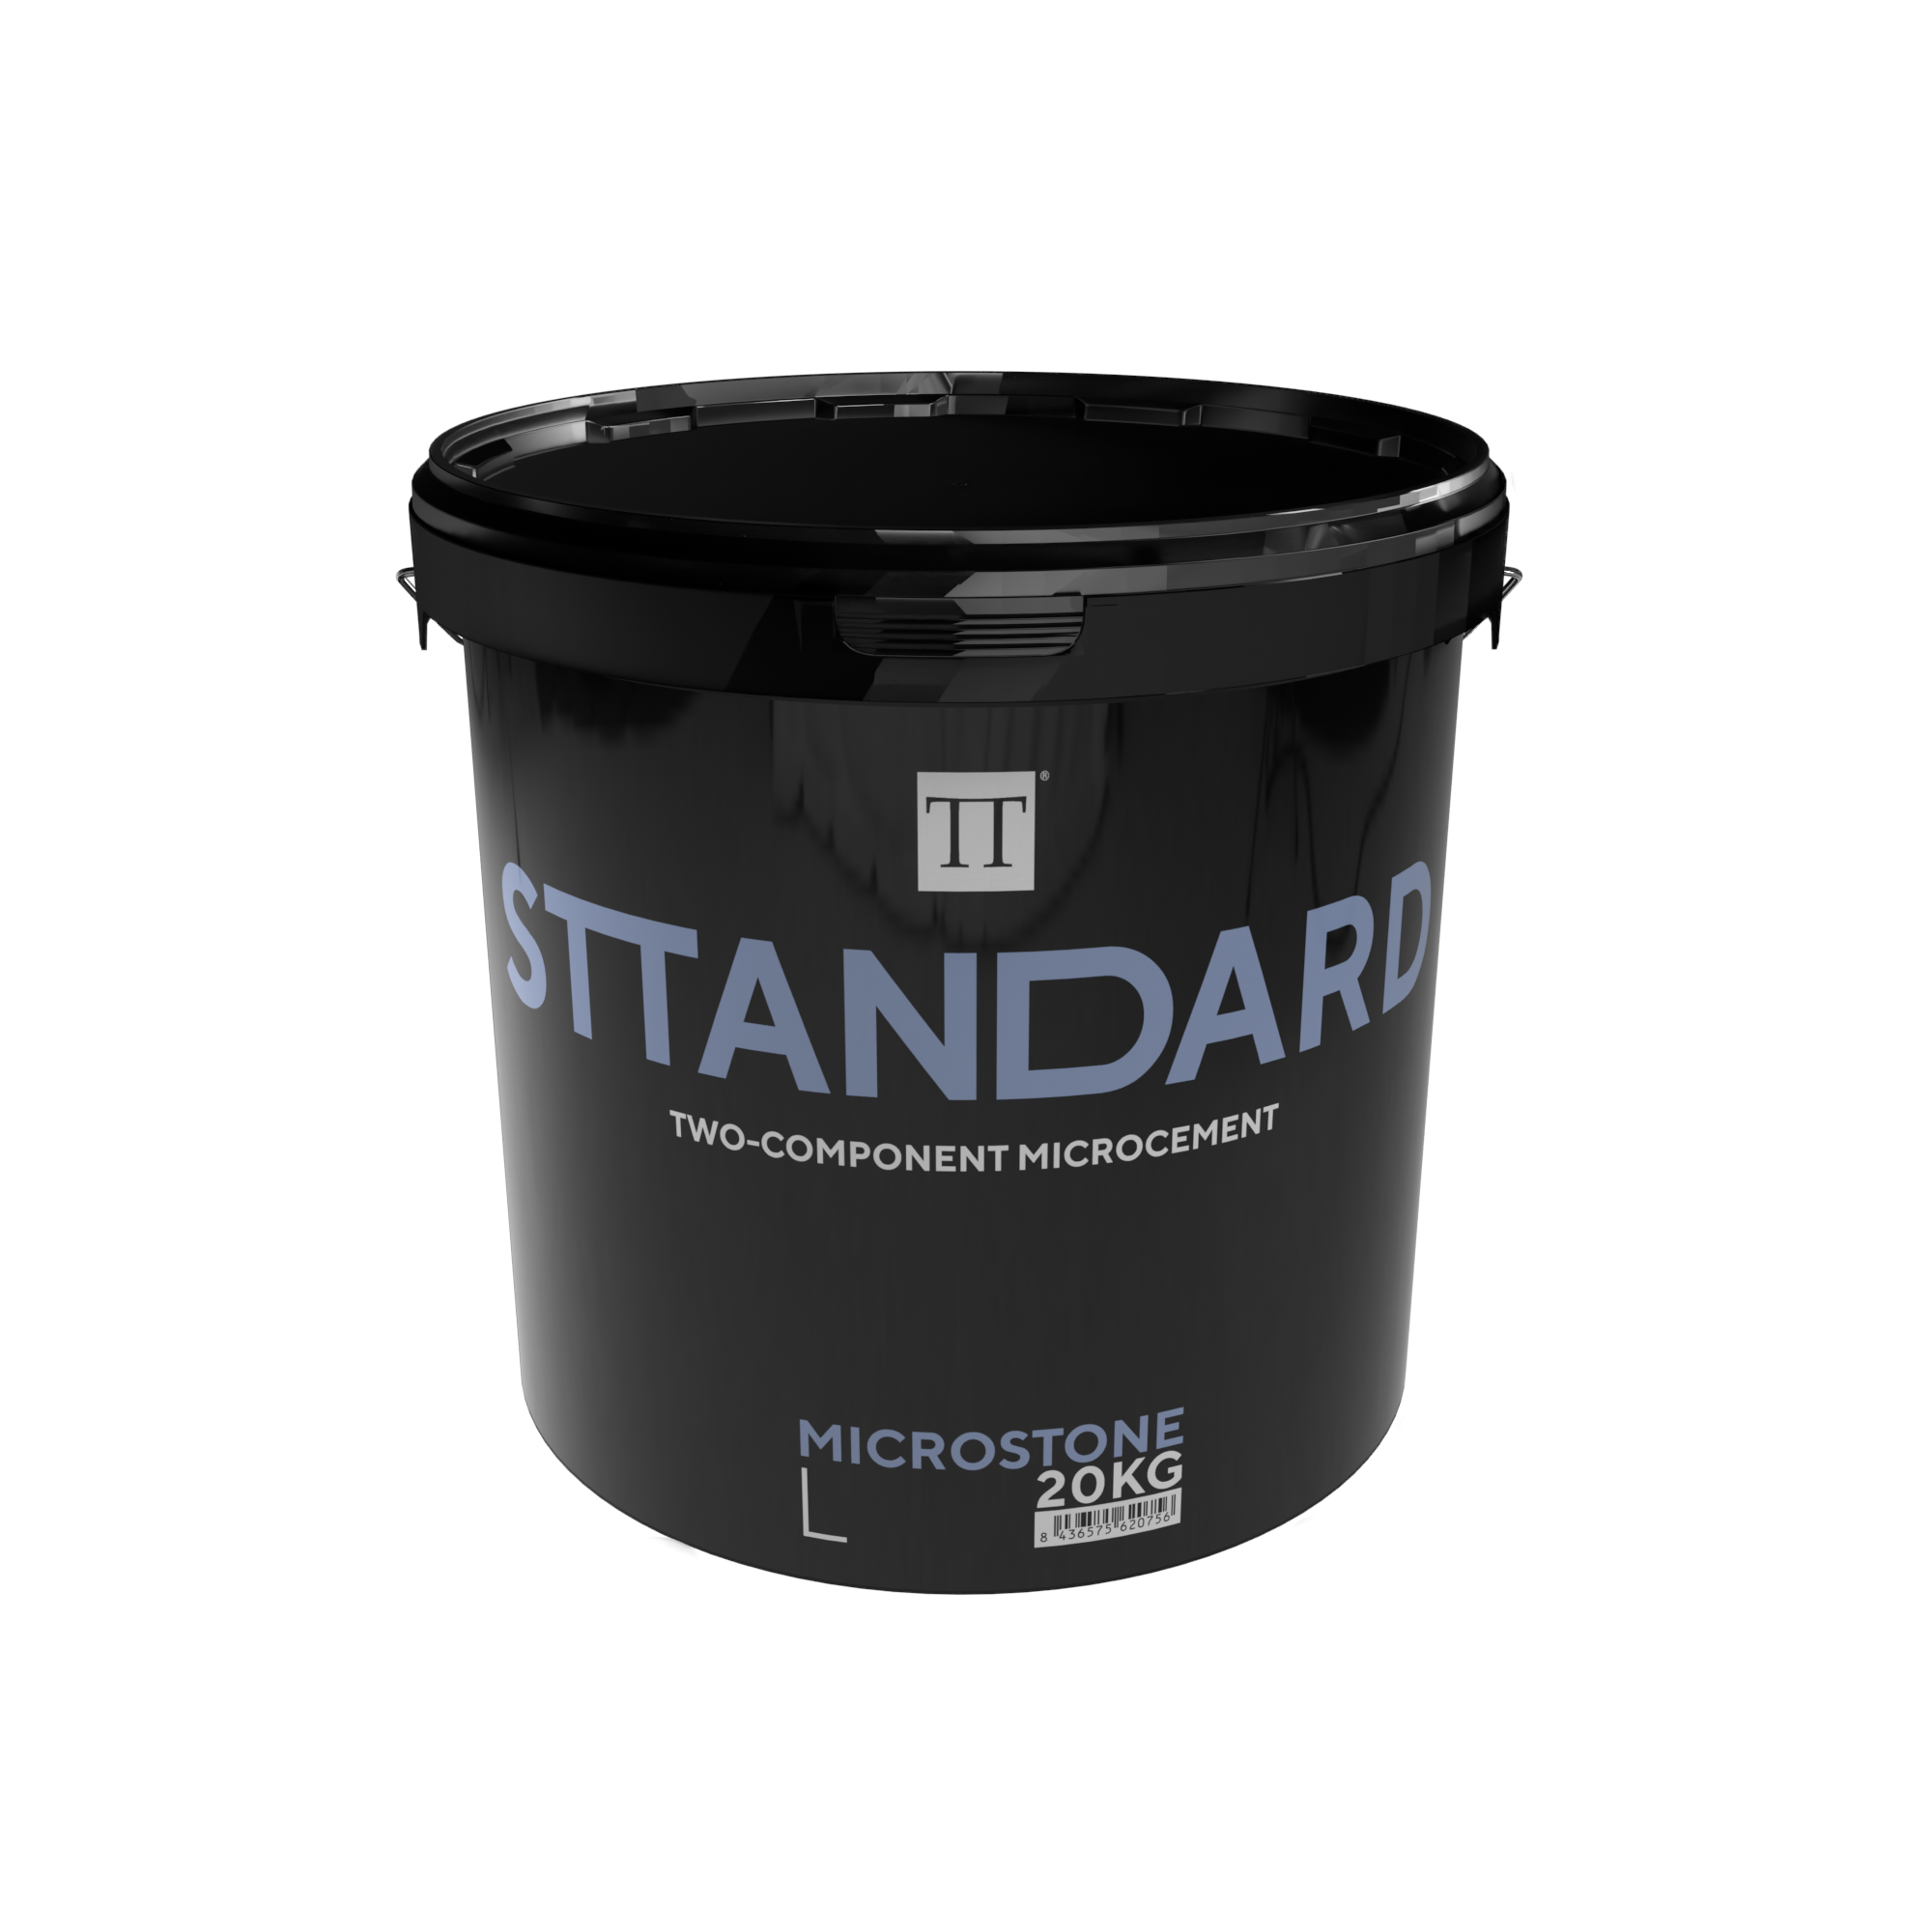 Sttandard Microstone 20 Kg